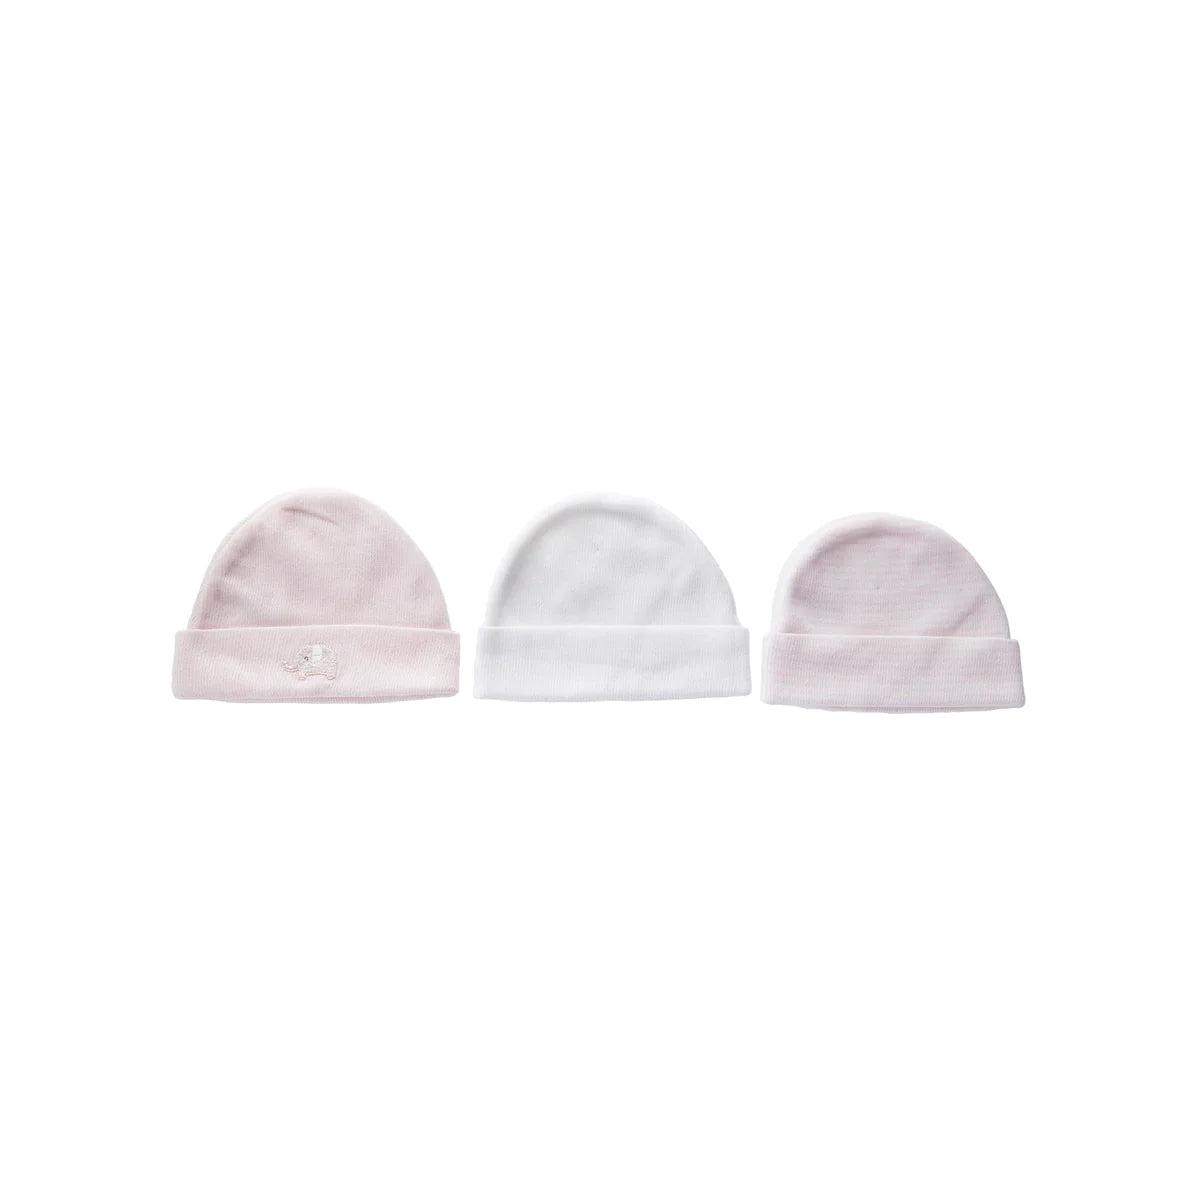 Playette Newborn Knitted Caps - Pink/White 3PK